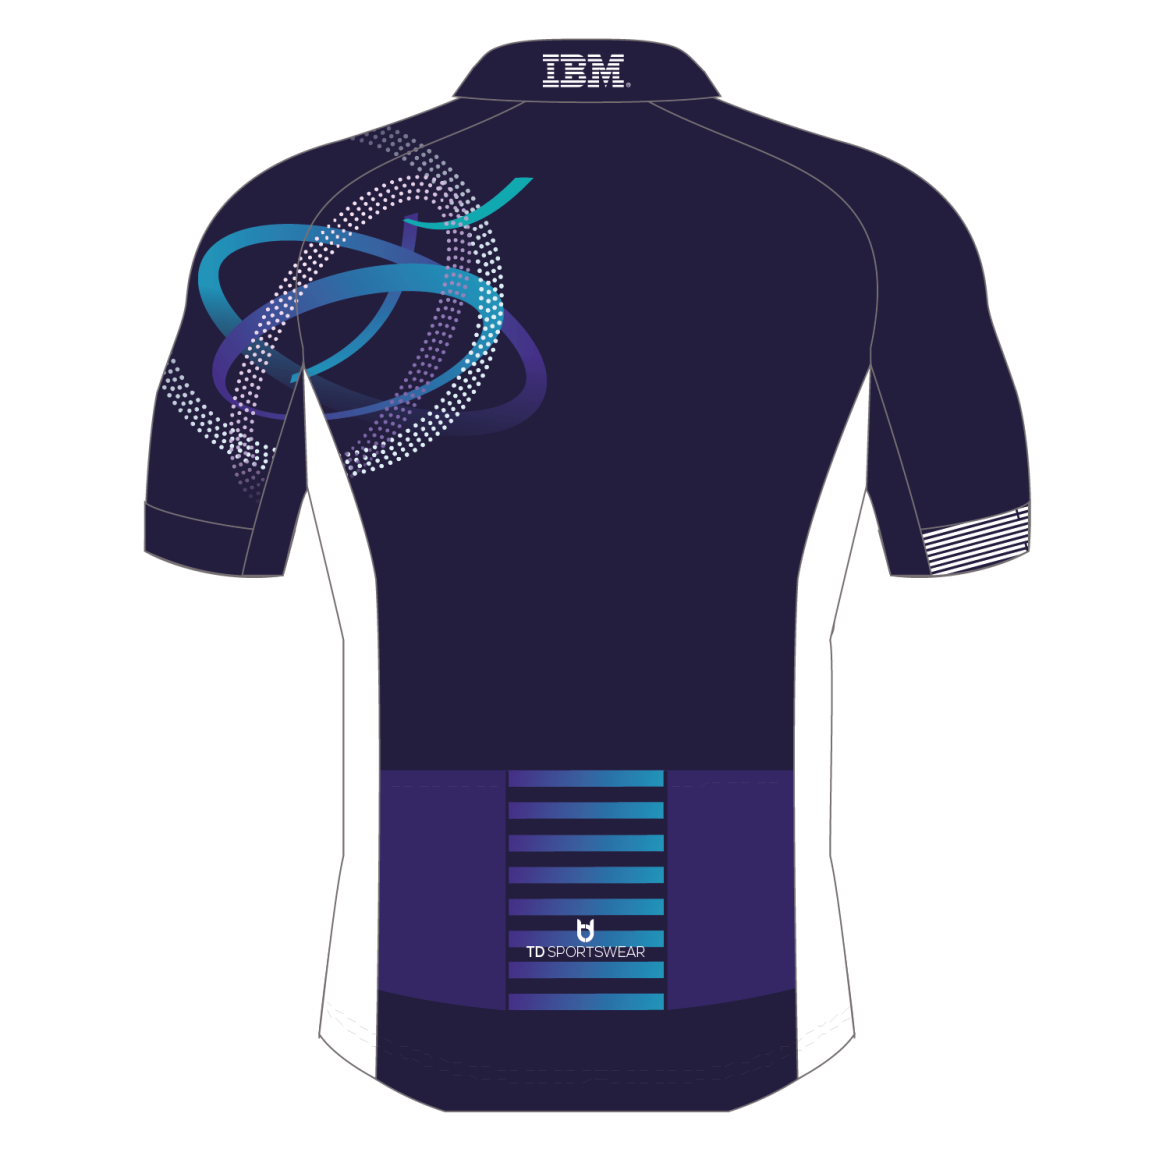 IBM wielershirt achterzijde